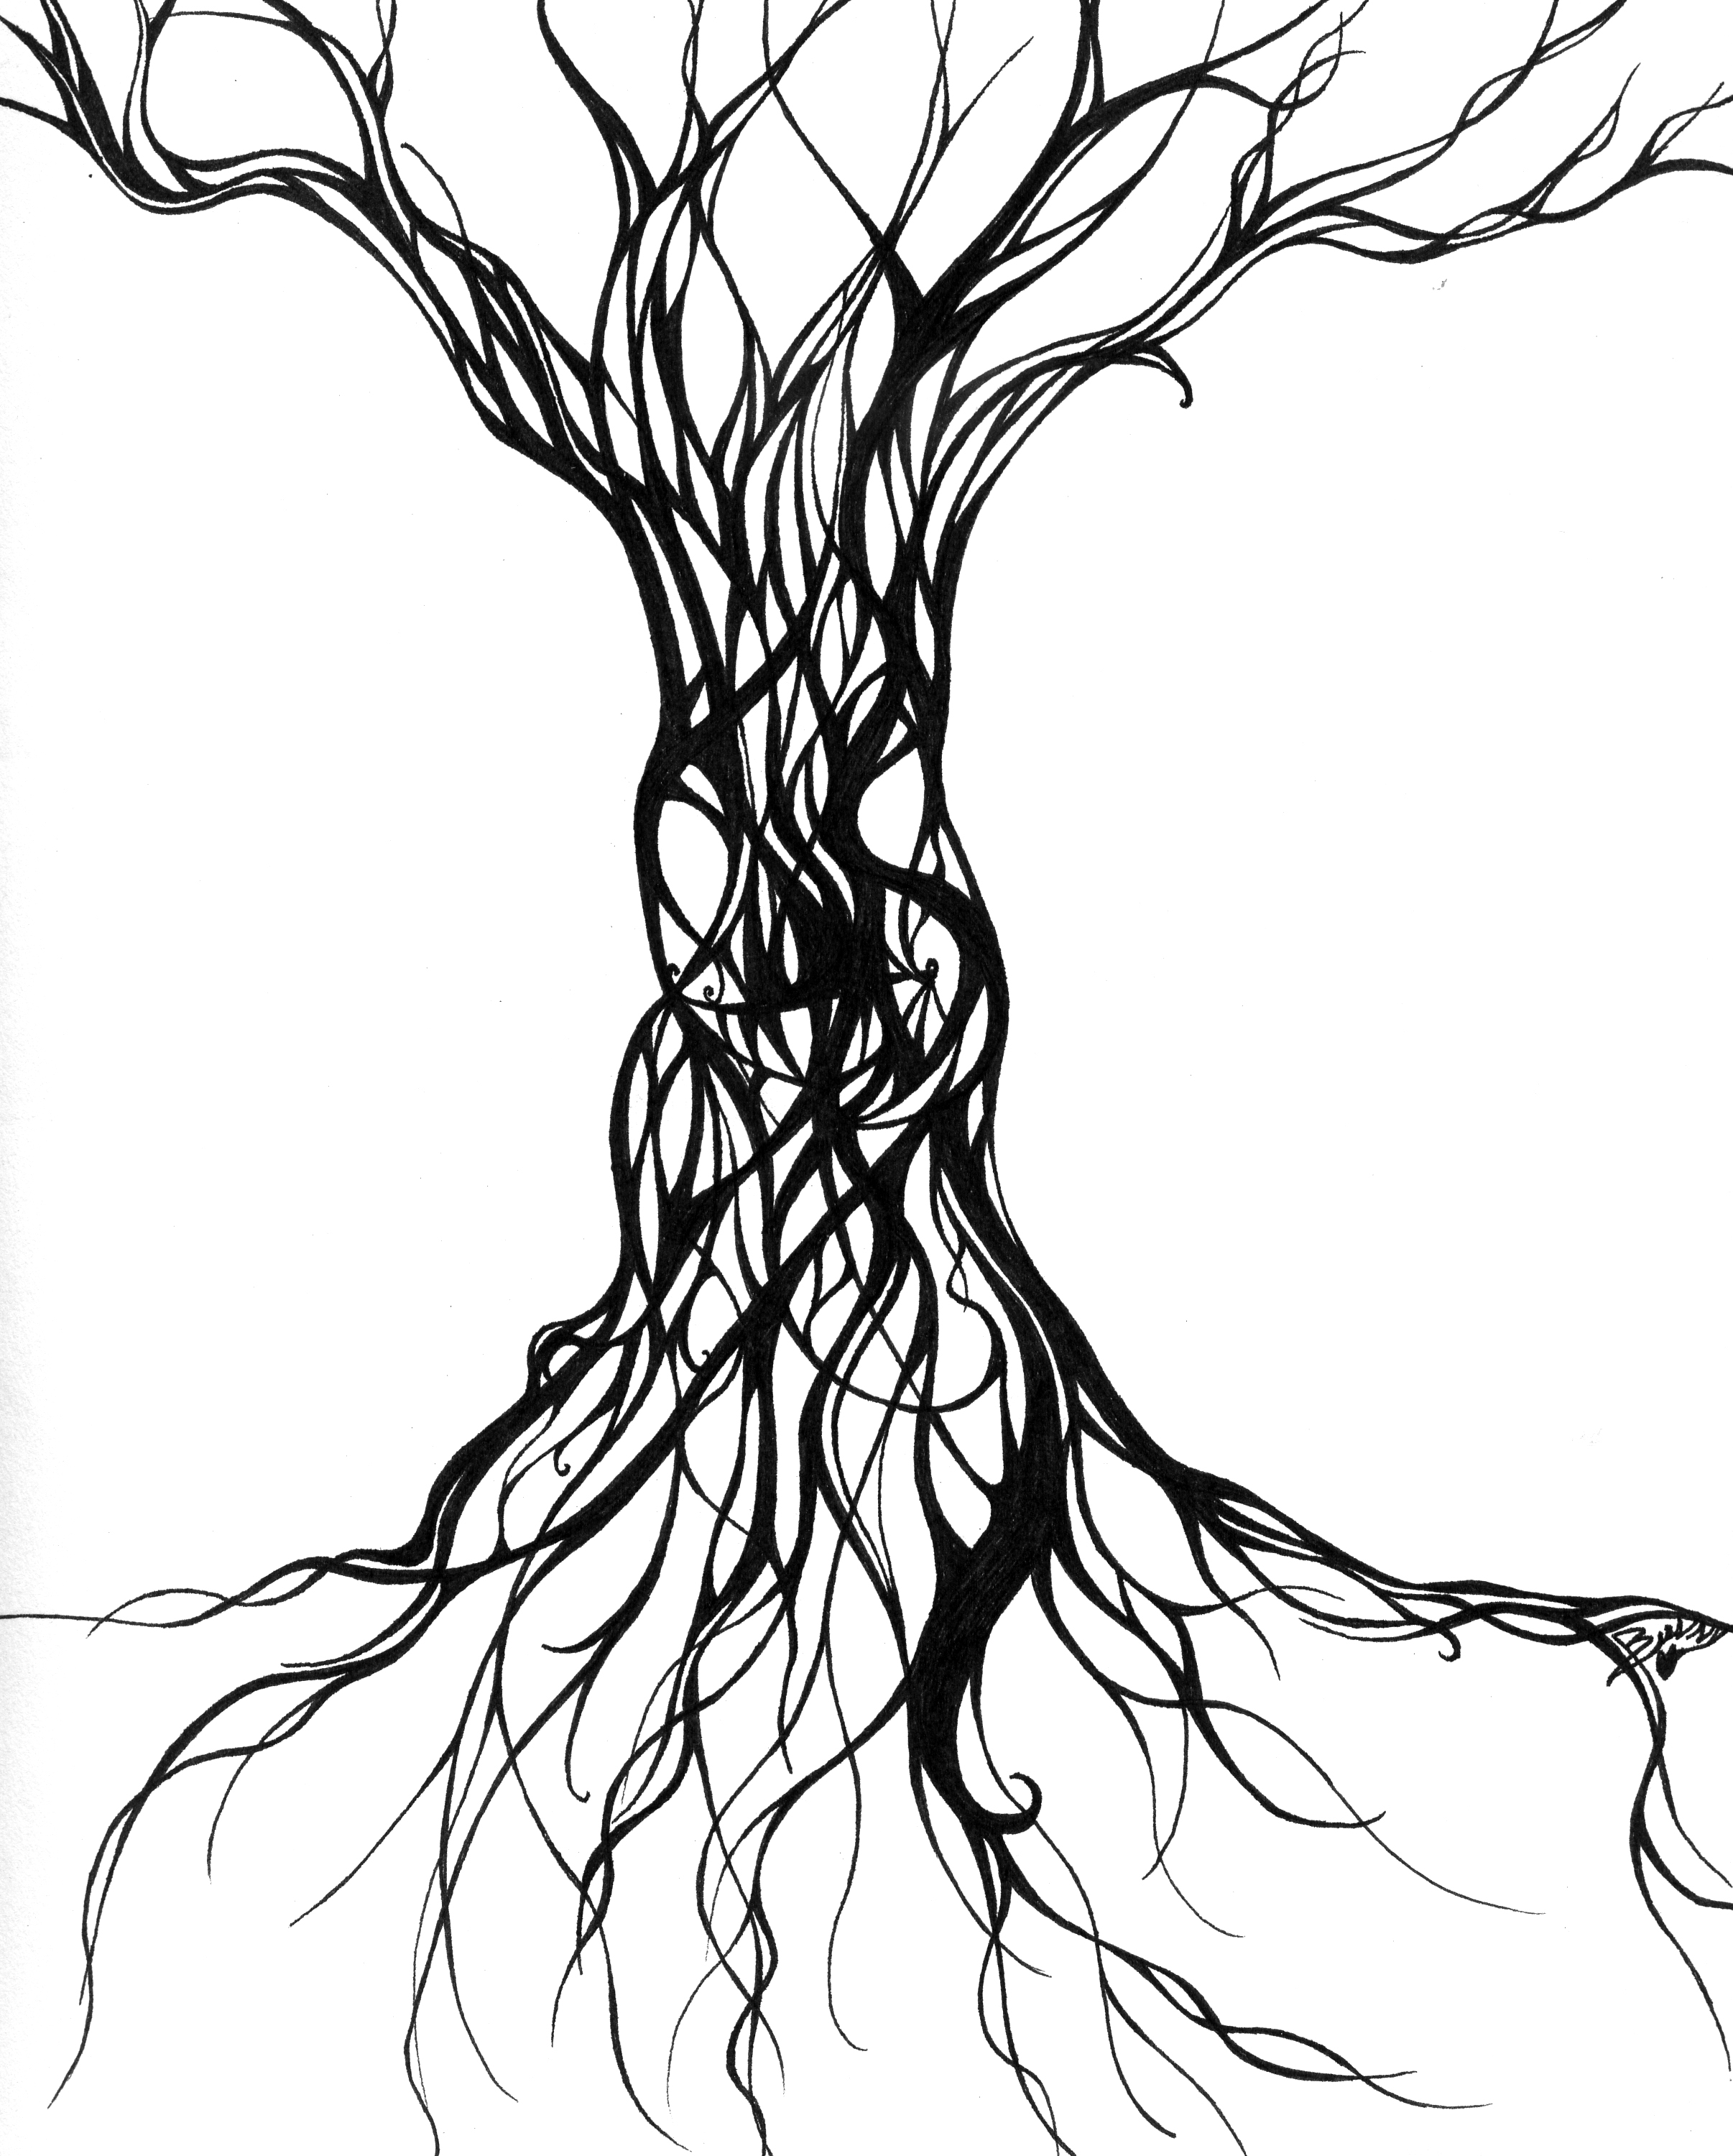 Evil Tree by terrible-beauty on deviantART